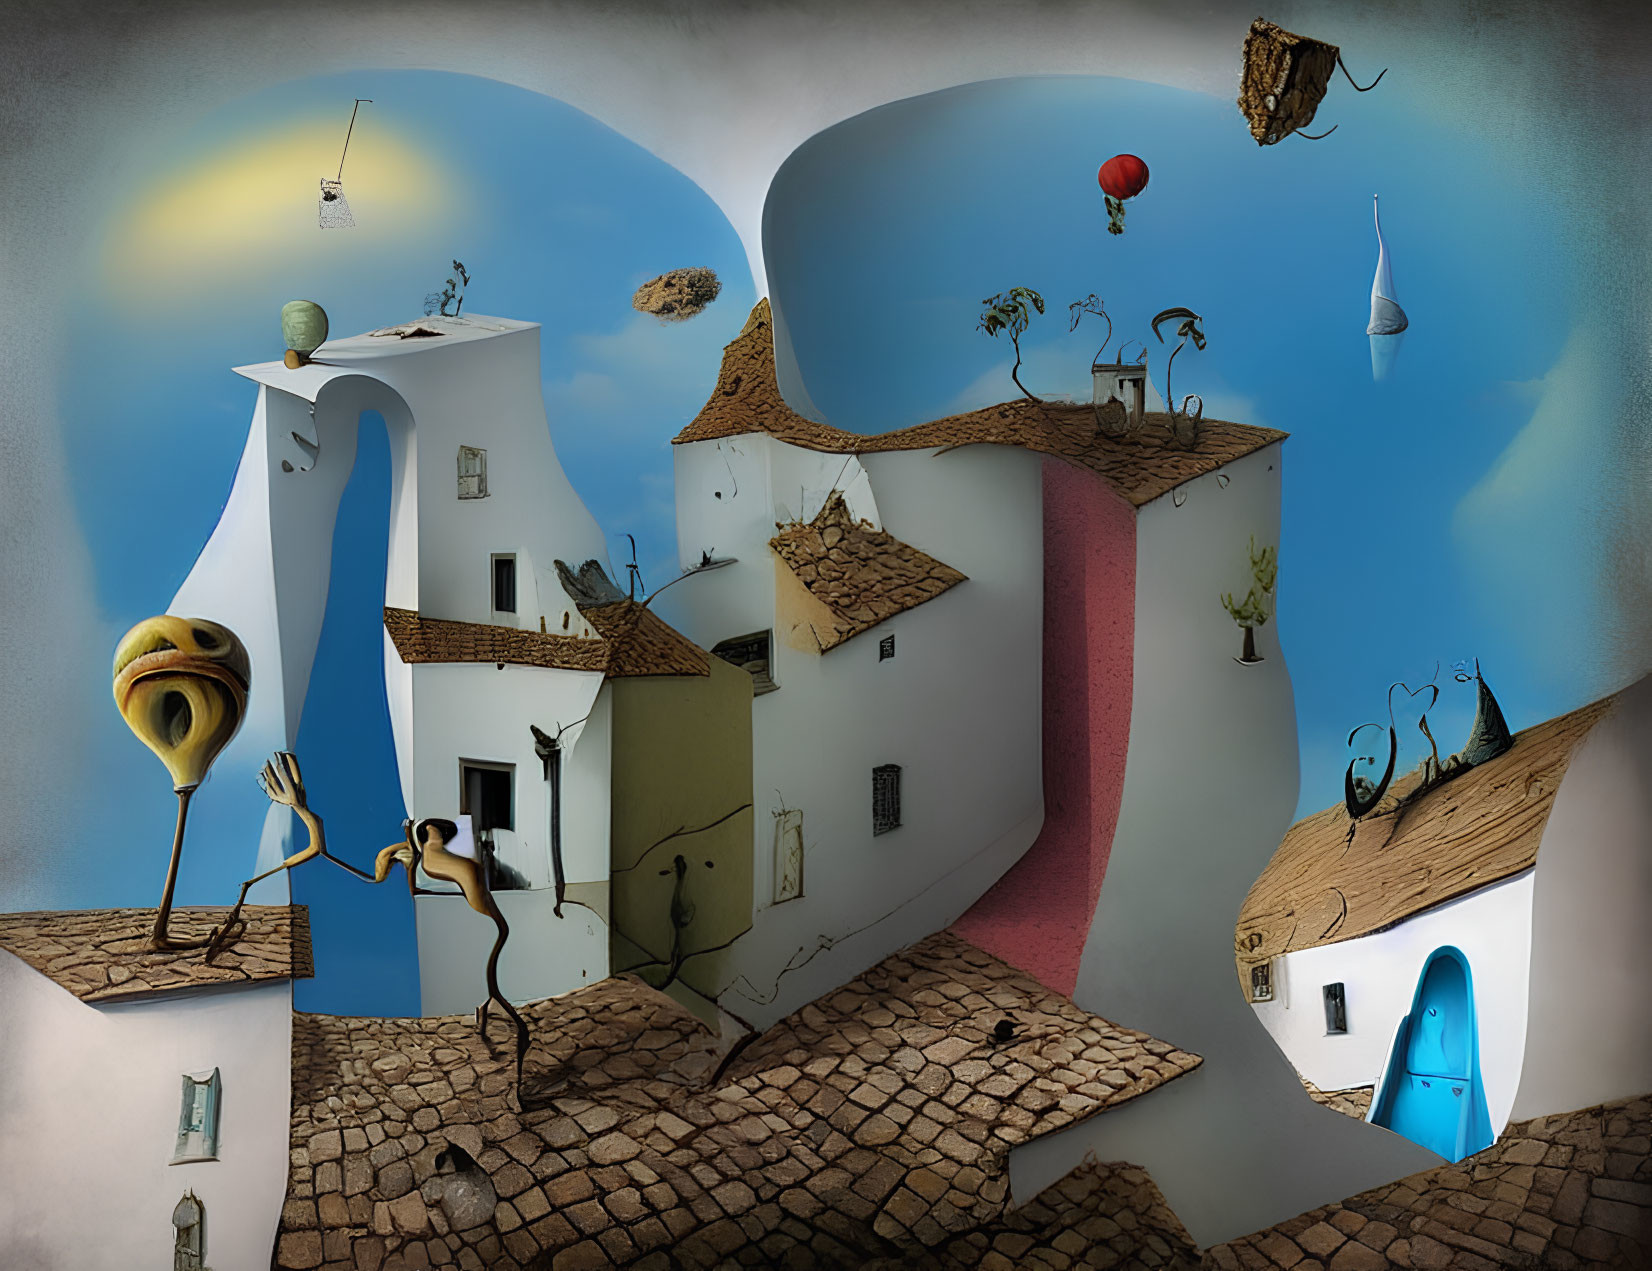 Surreal artwork of warped village with floating elements